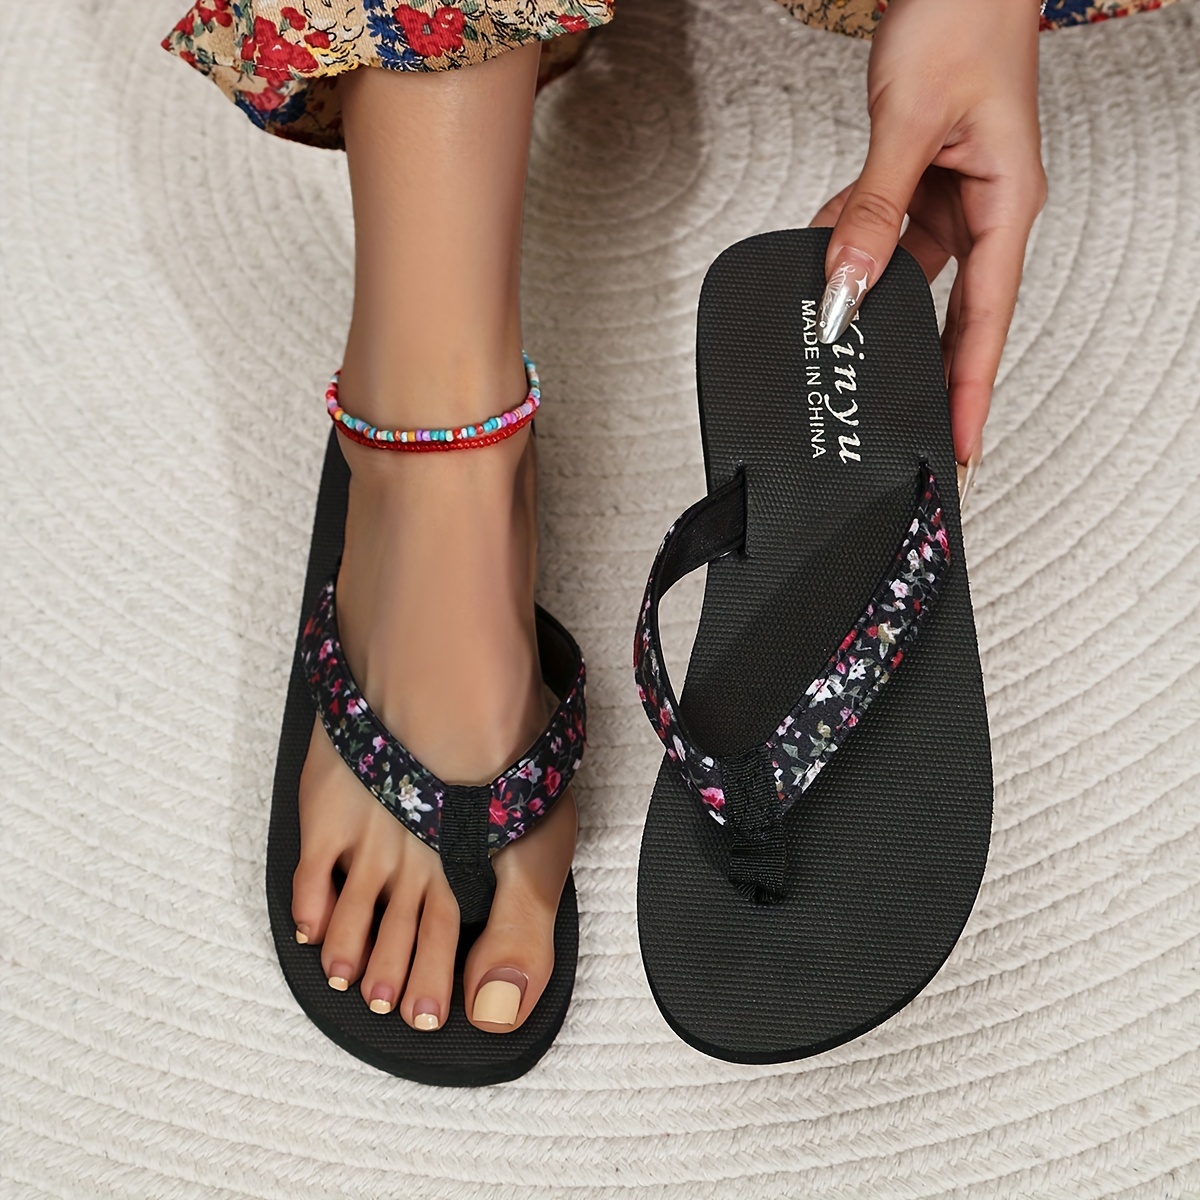 DPTALR Women's Crystal Sandals Flowers Slippers Shoes Ladies Footwear Flat  Beach Shoes 